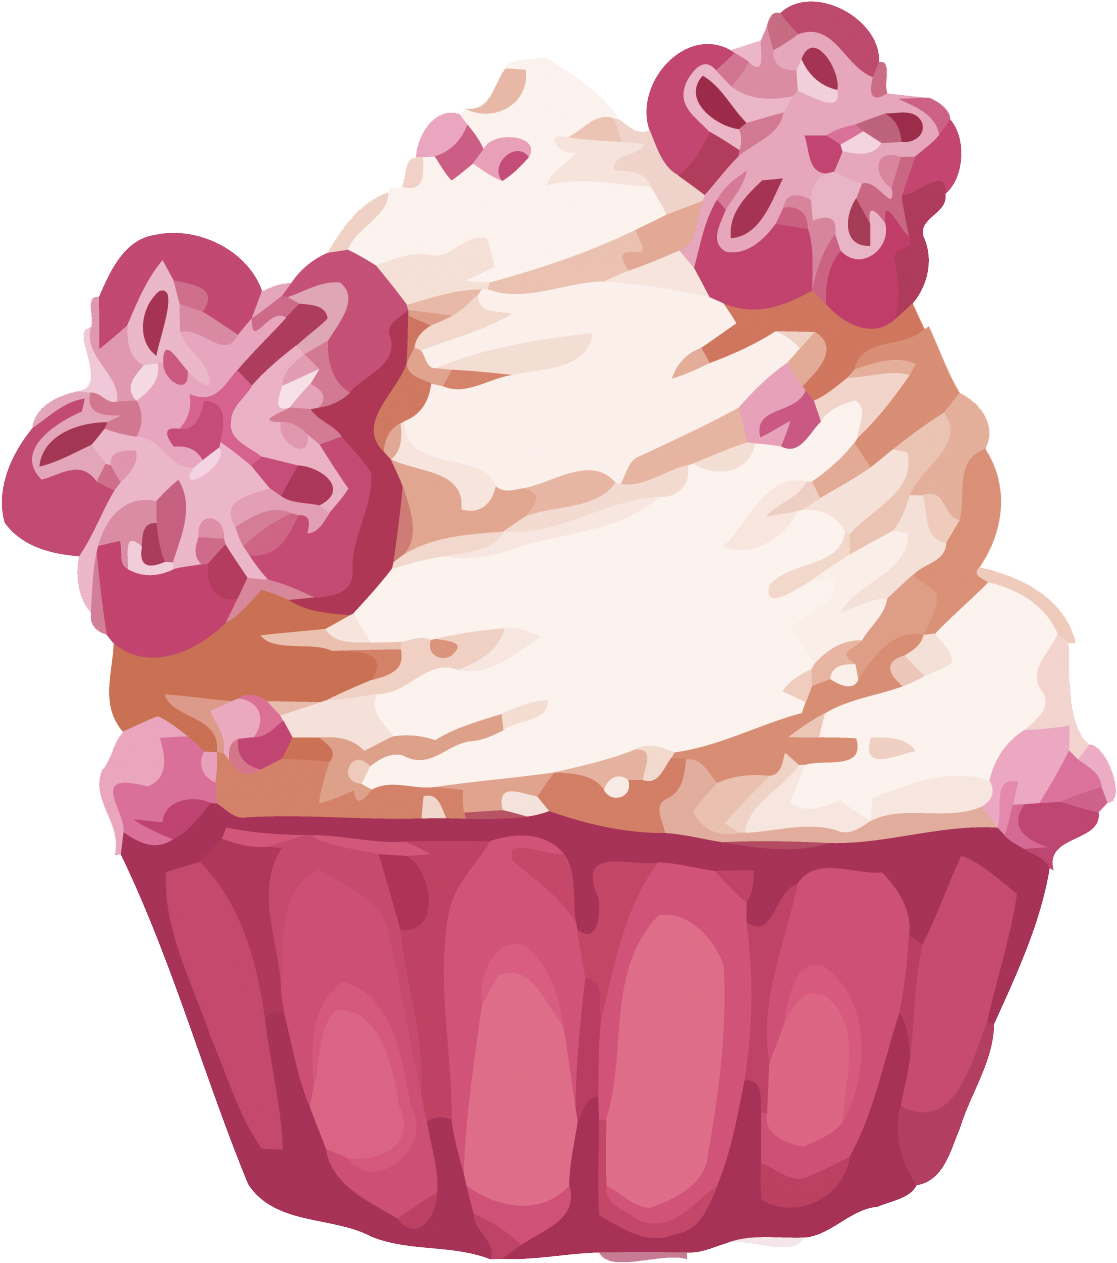 Cupcake Macaron Muffin Pastry - Cake (1500x1566)